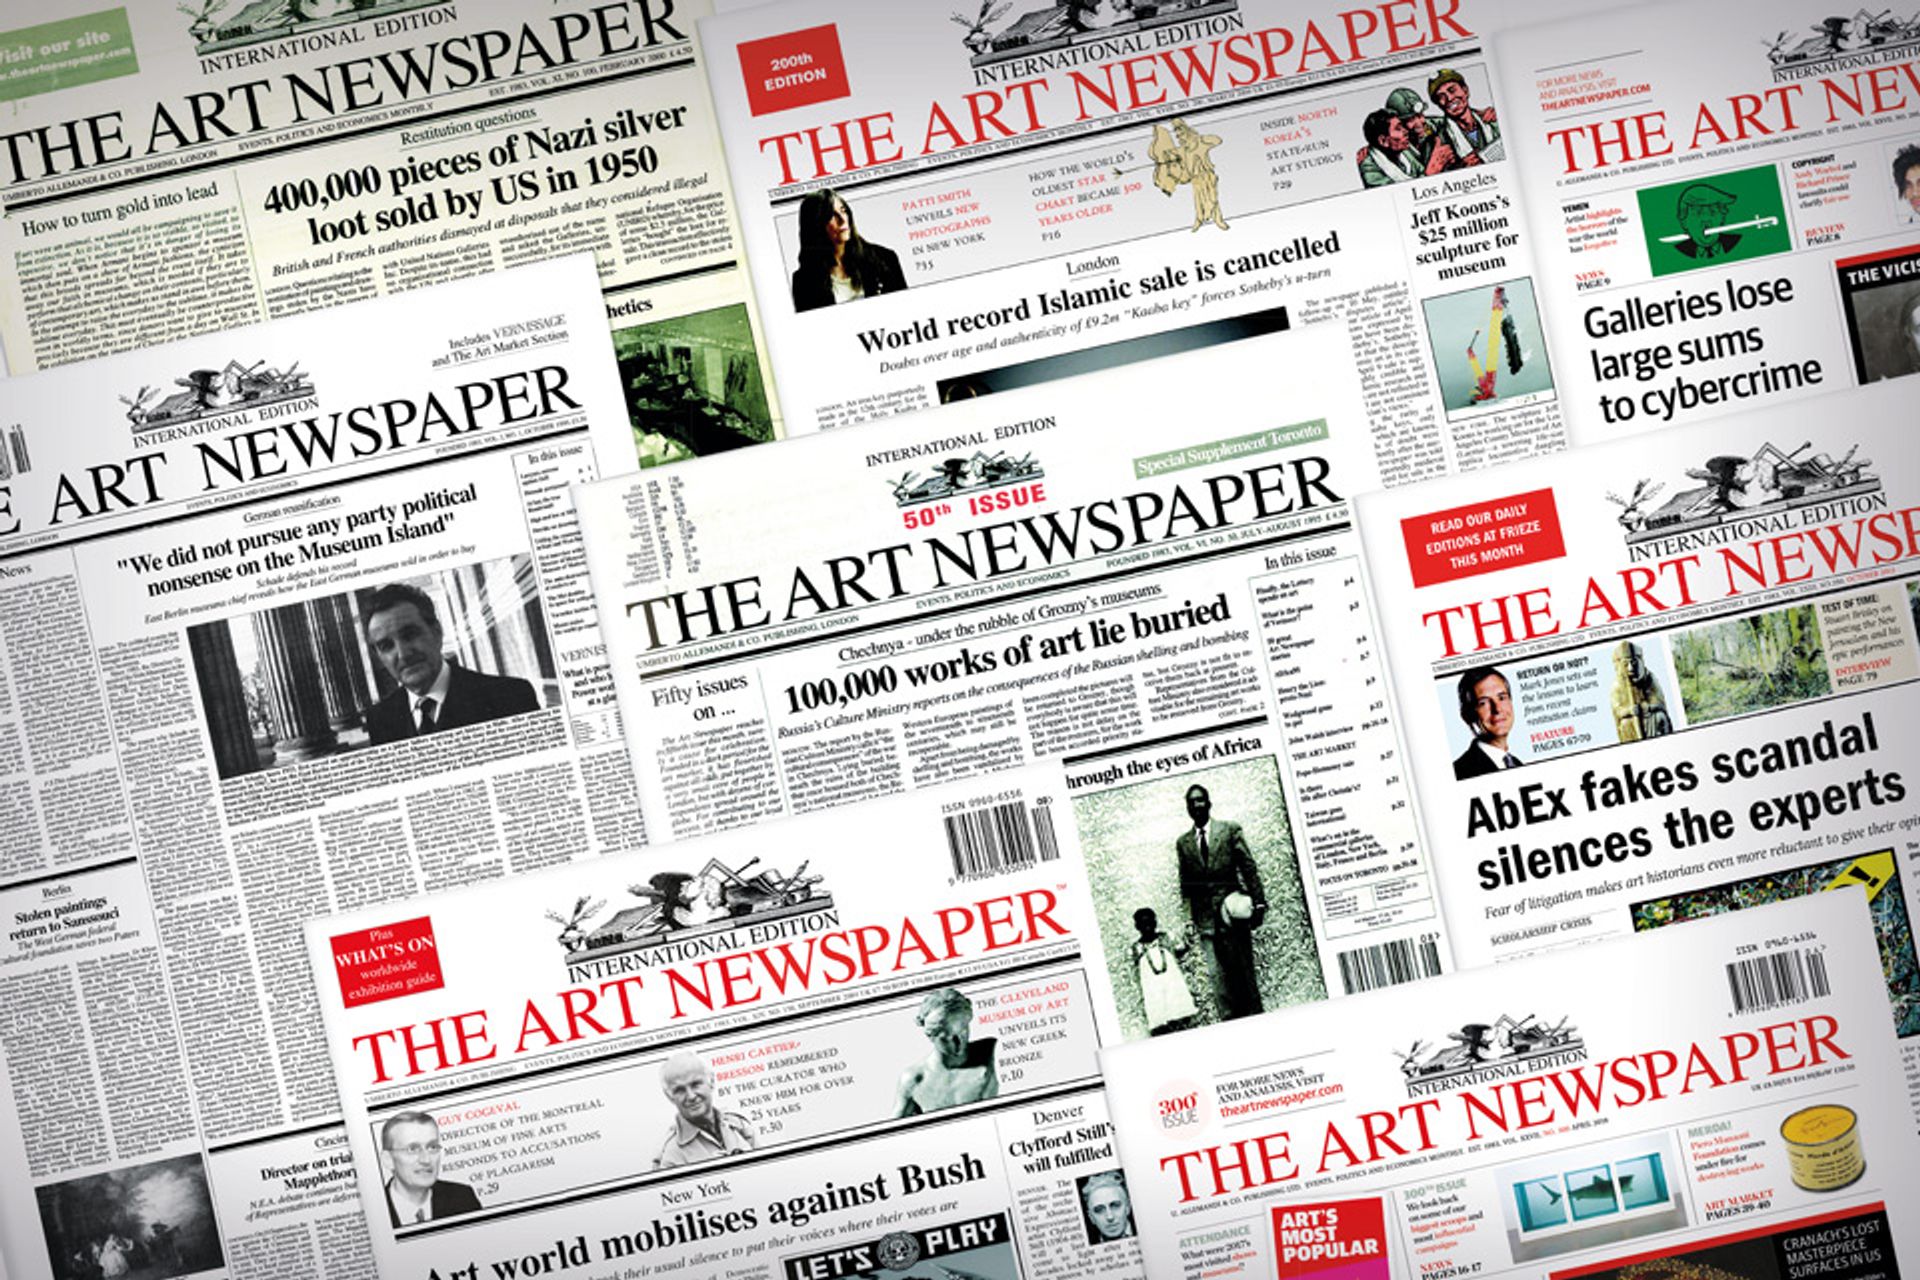 The Art Newspaper covers The Art Newspaper